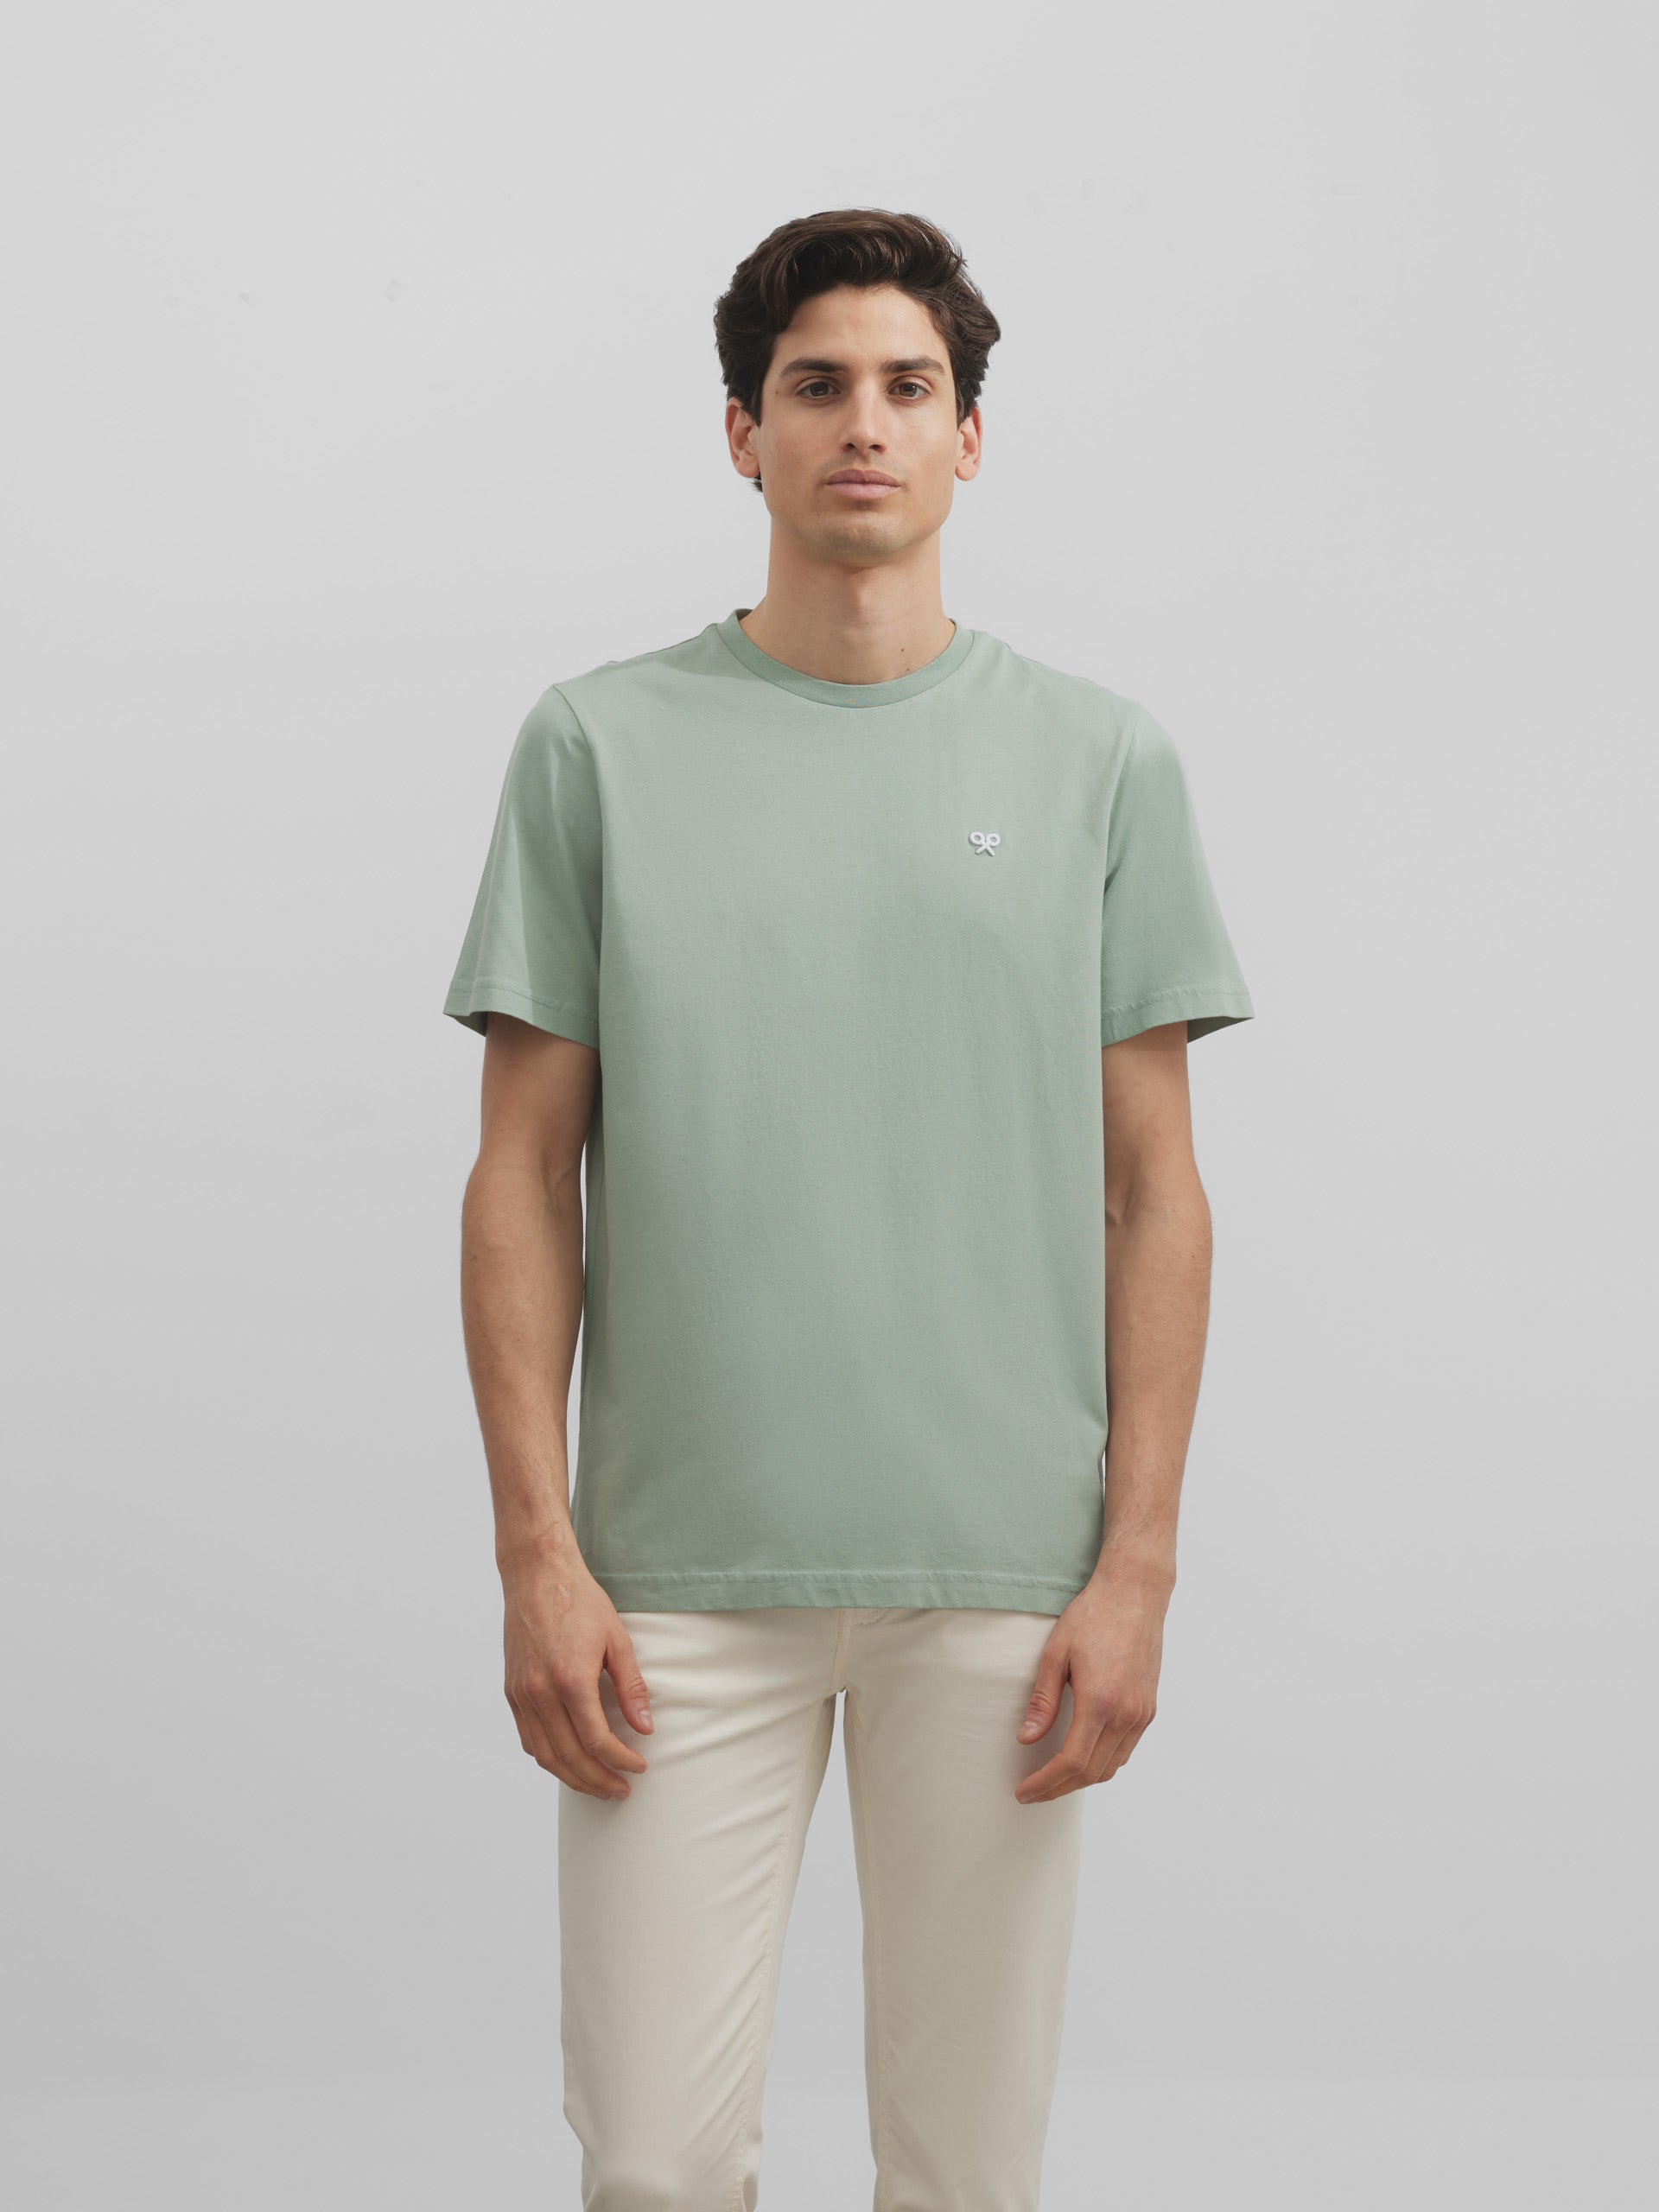 Green geometric racket t-shirt